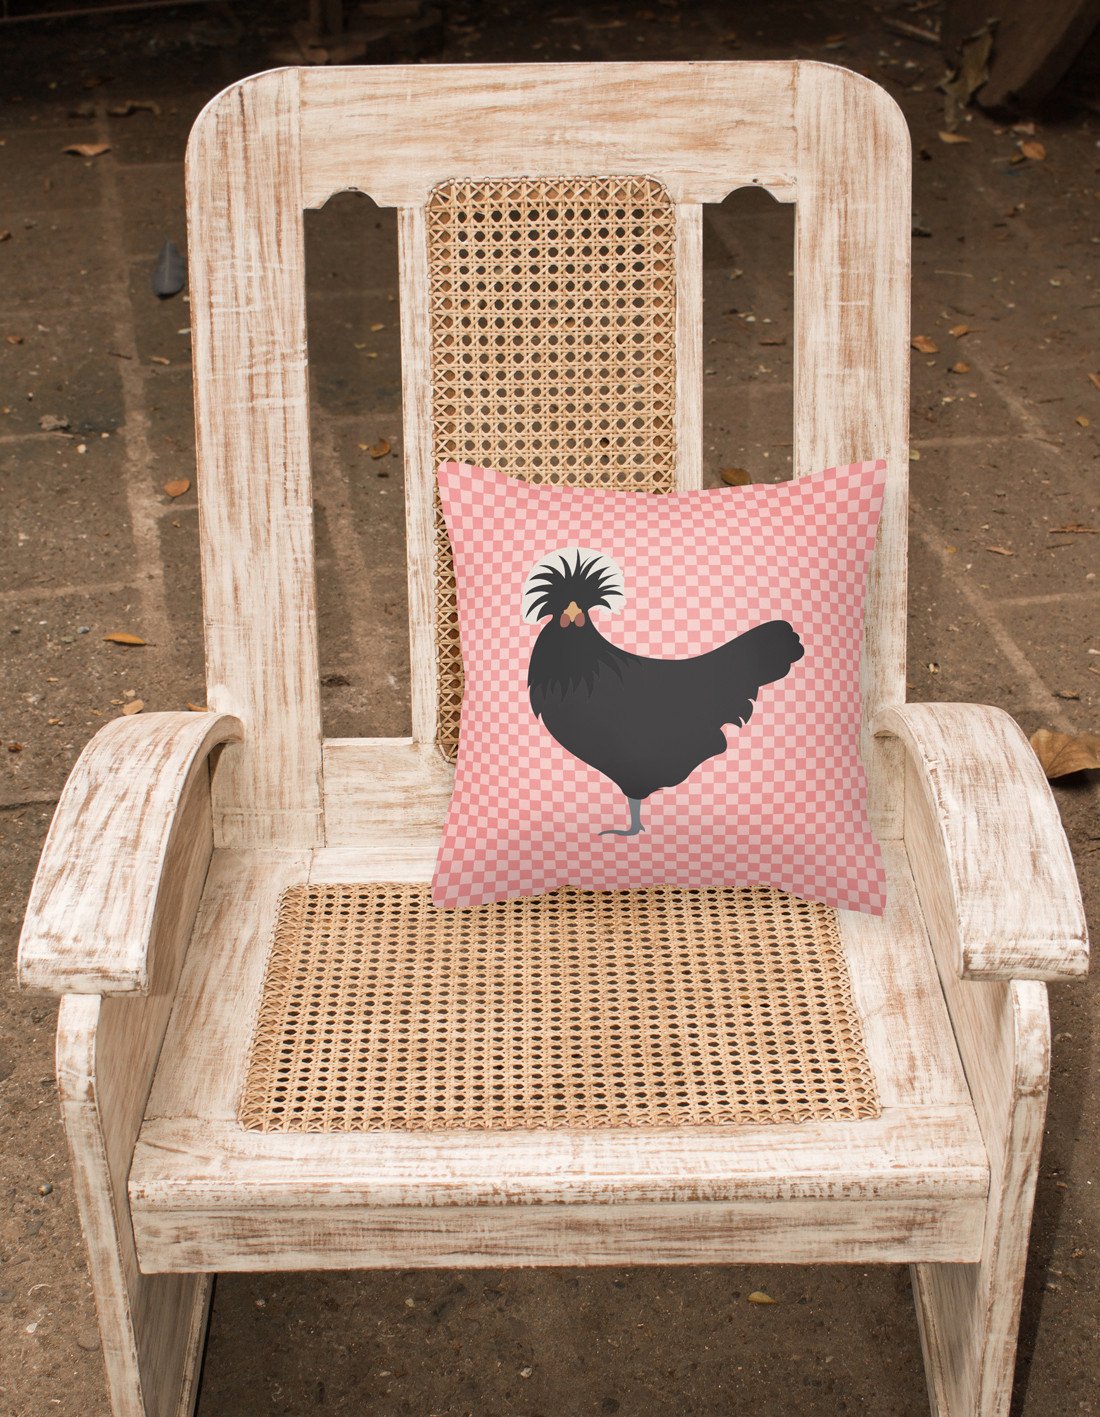 Polish Poland Chicken Pink Check Fabric Decorative Pillow BB7834PW1818 by Caroline's Treasures